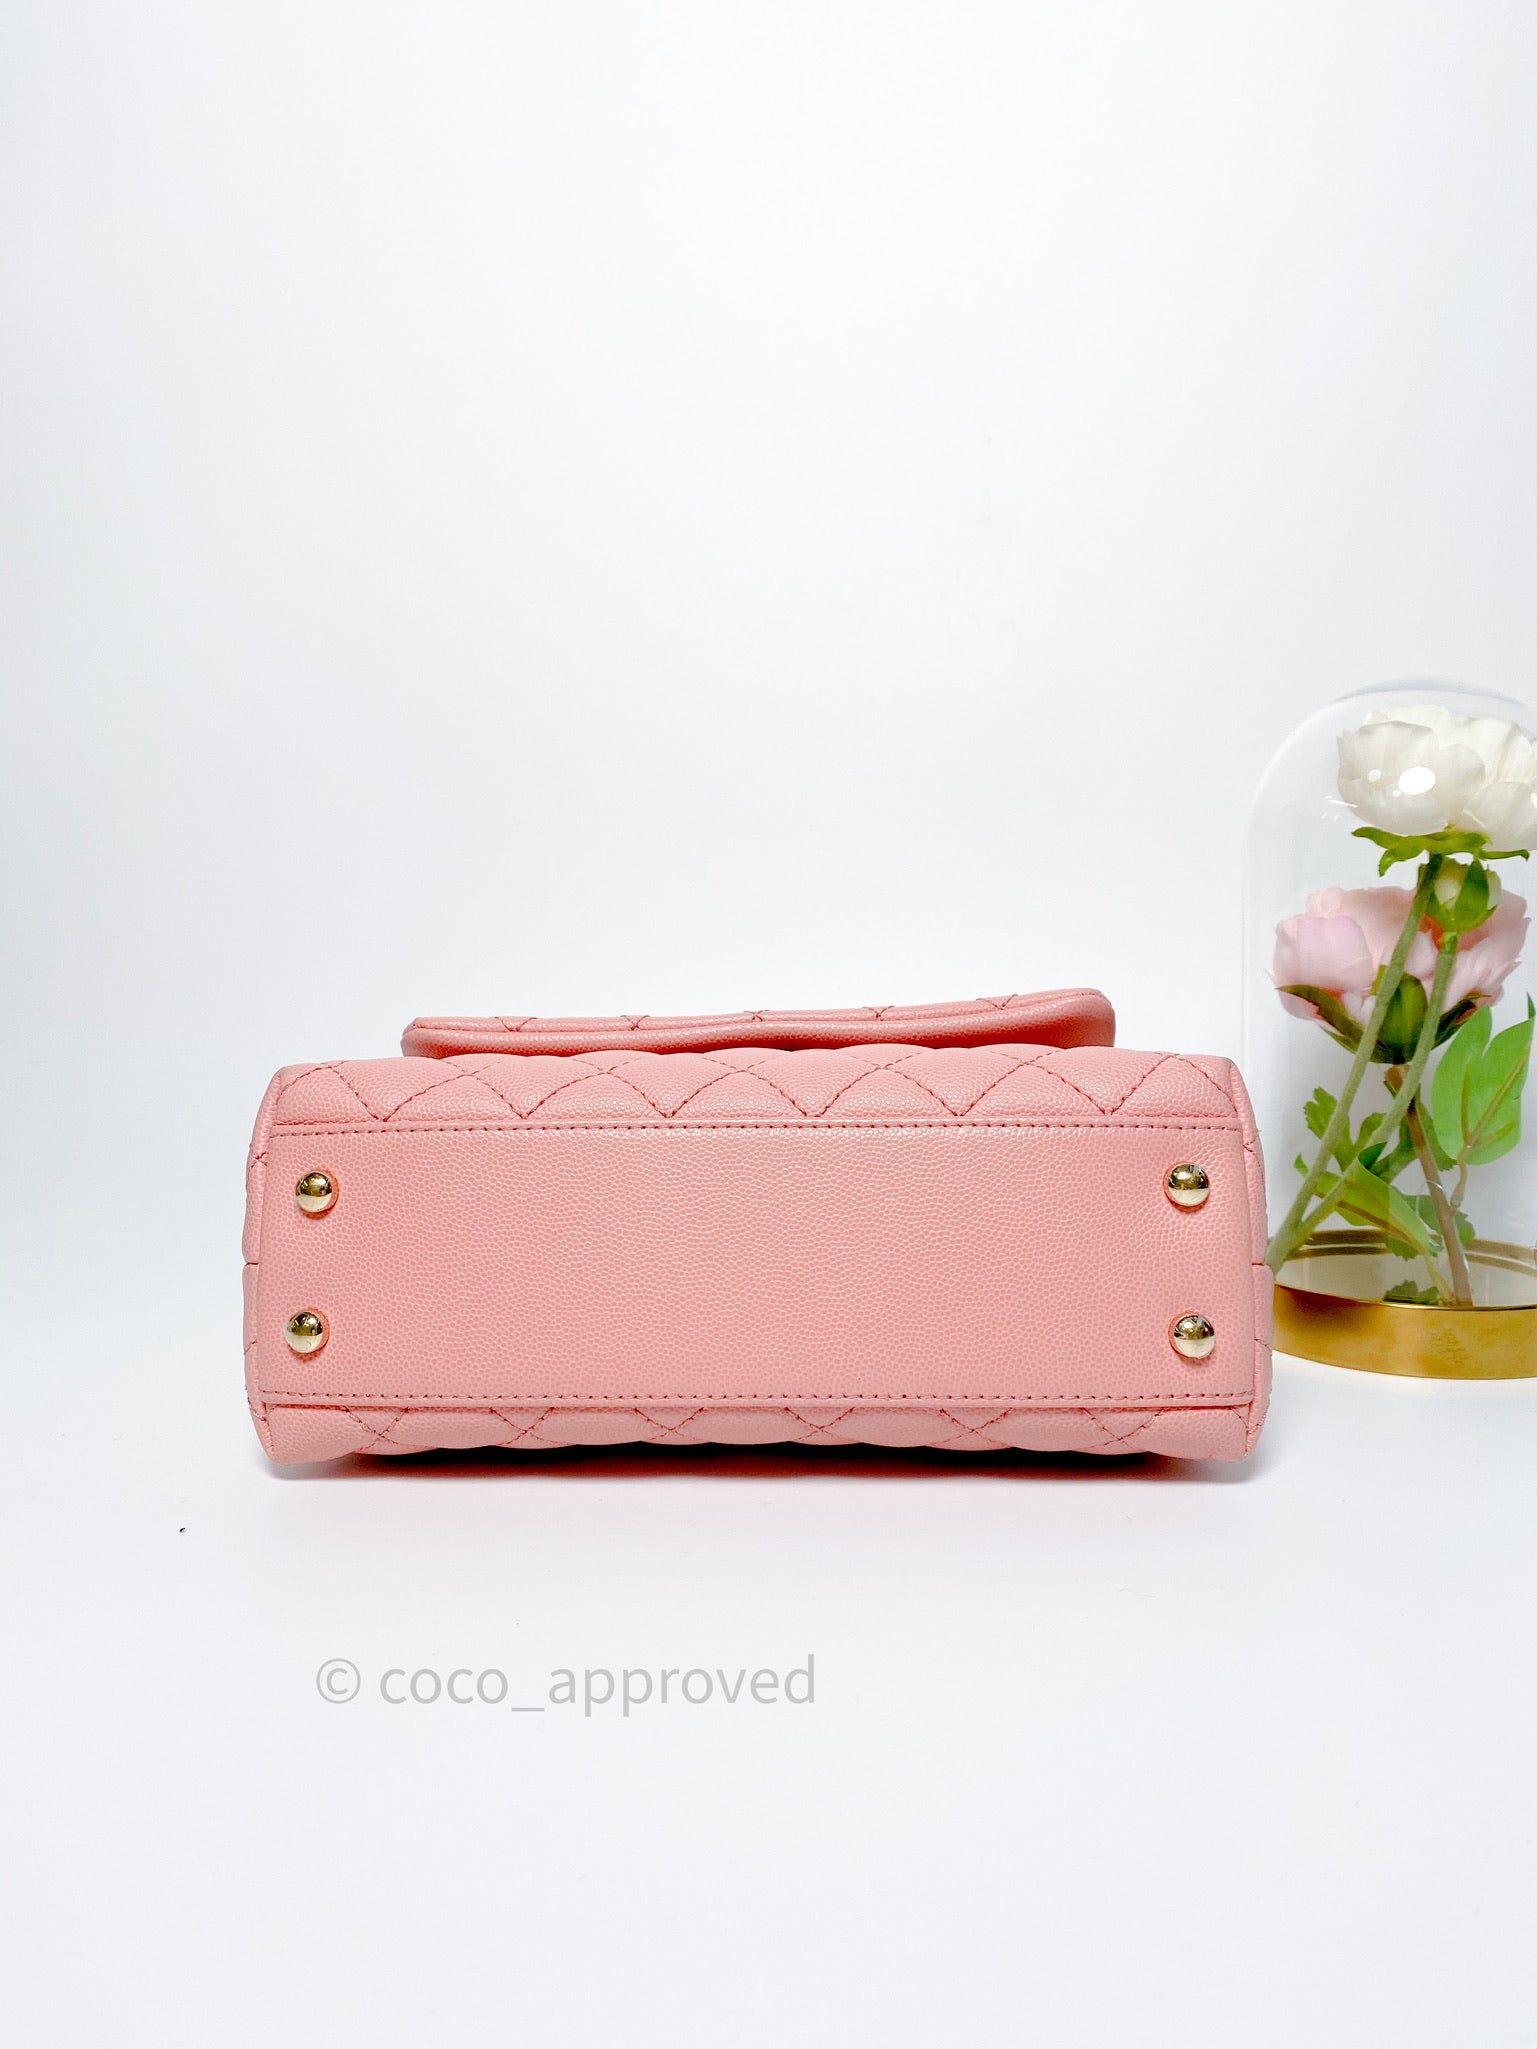 Reserved - Chanel Coco Collector Mini Handbag 1987 - Katheley's